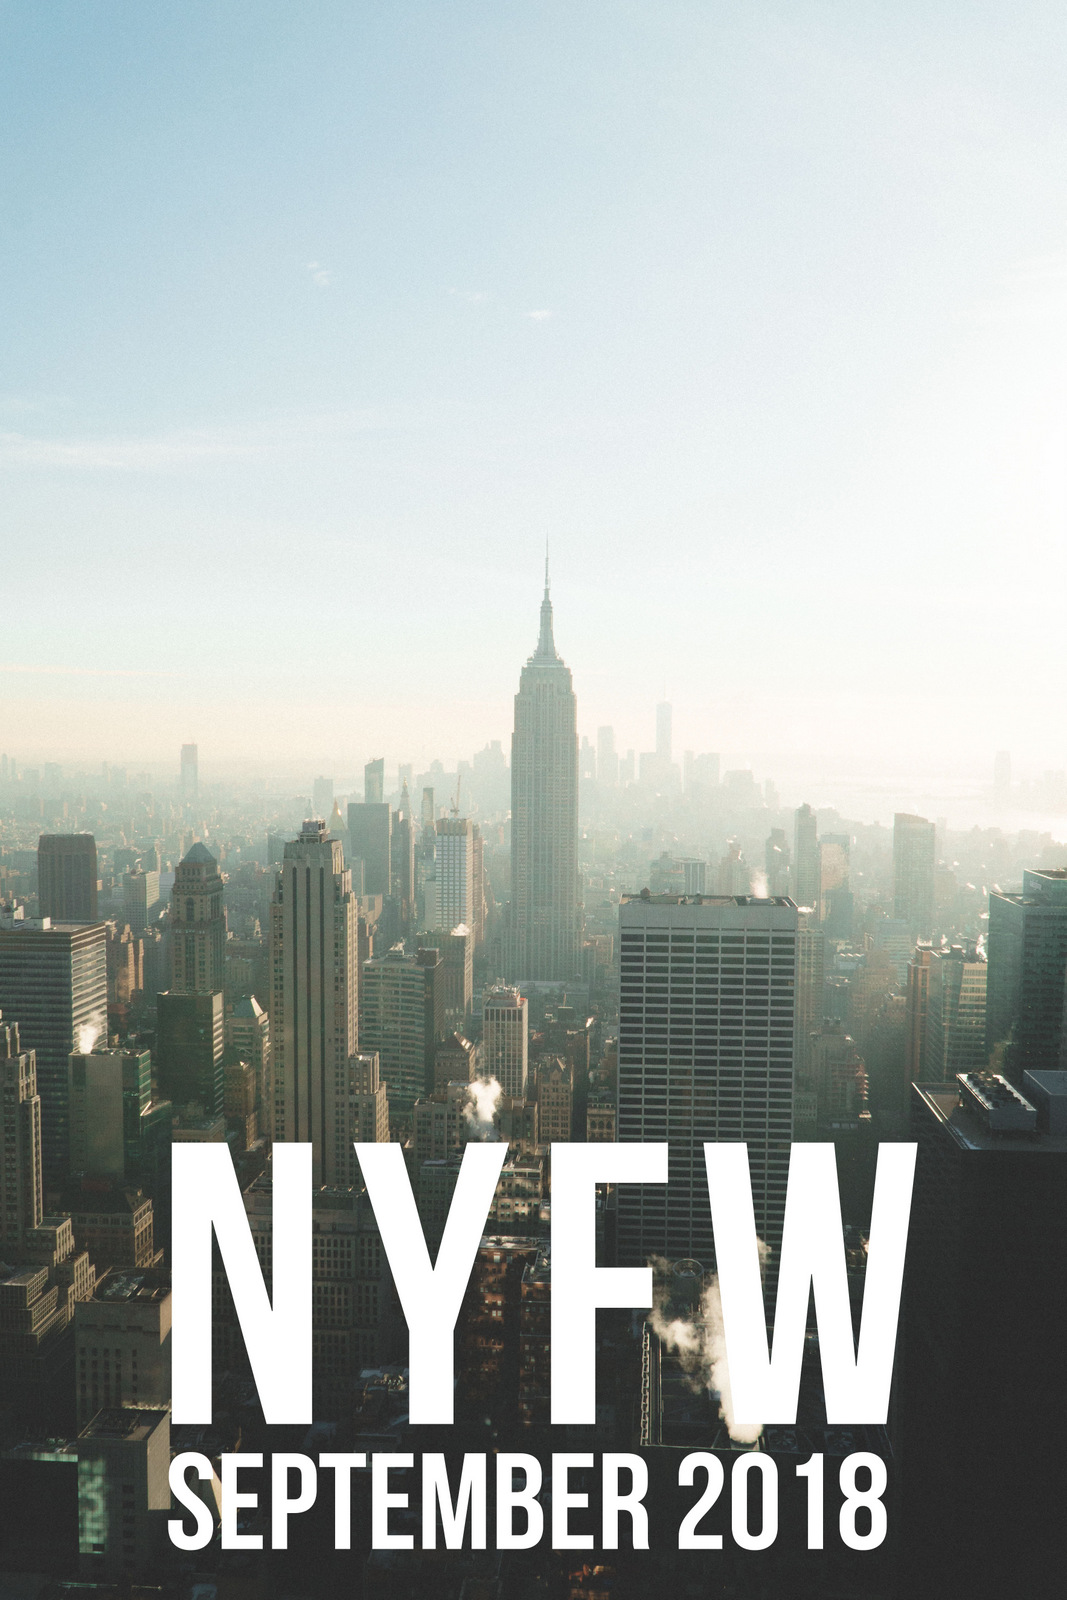 New York Fashion - NYFW September 2018